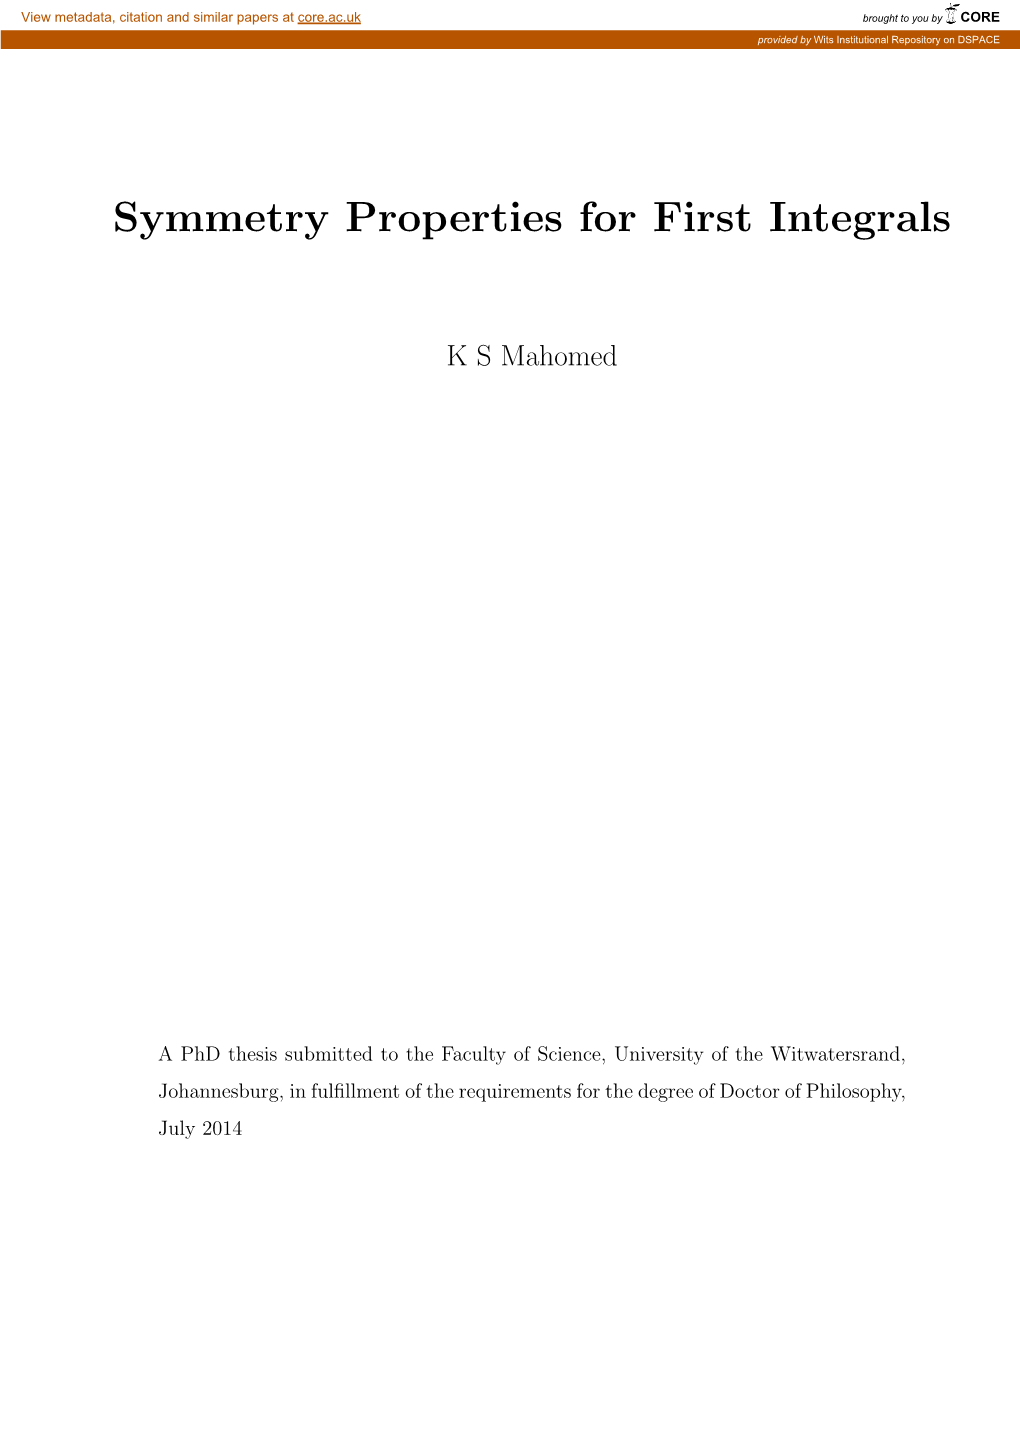 Symmetry Properties for First Integrals